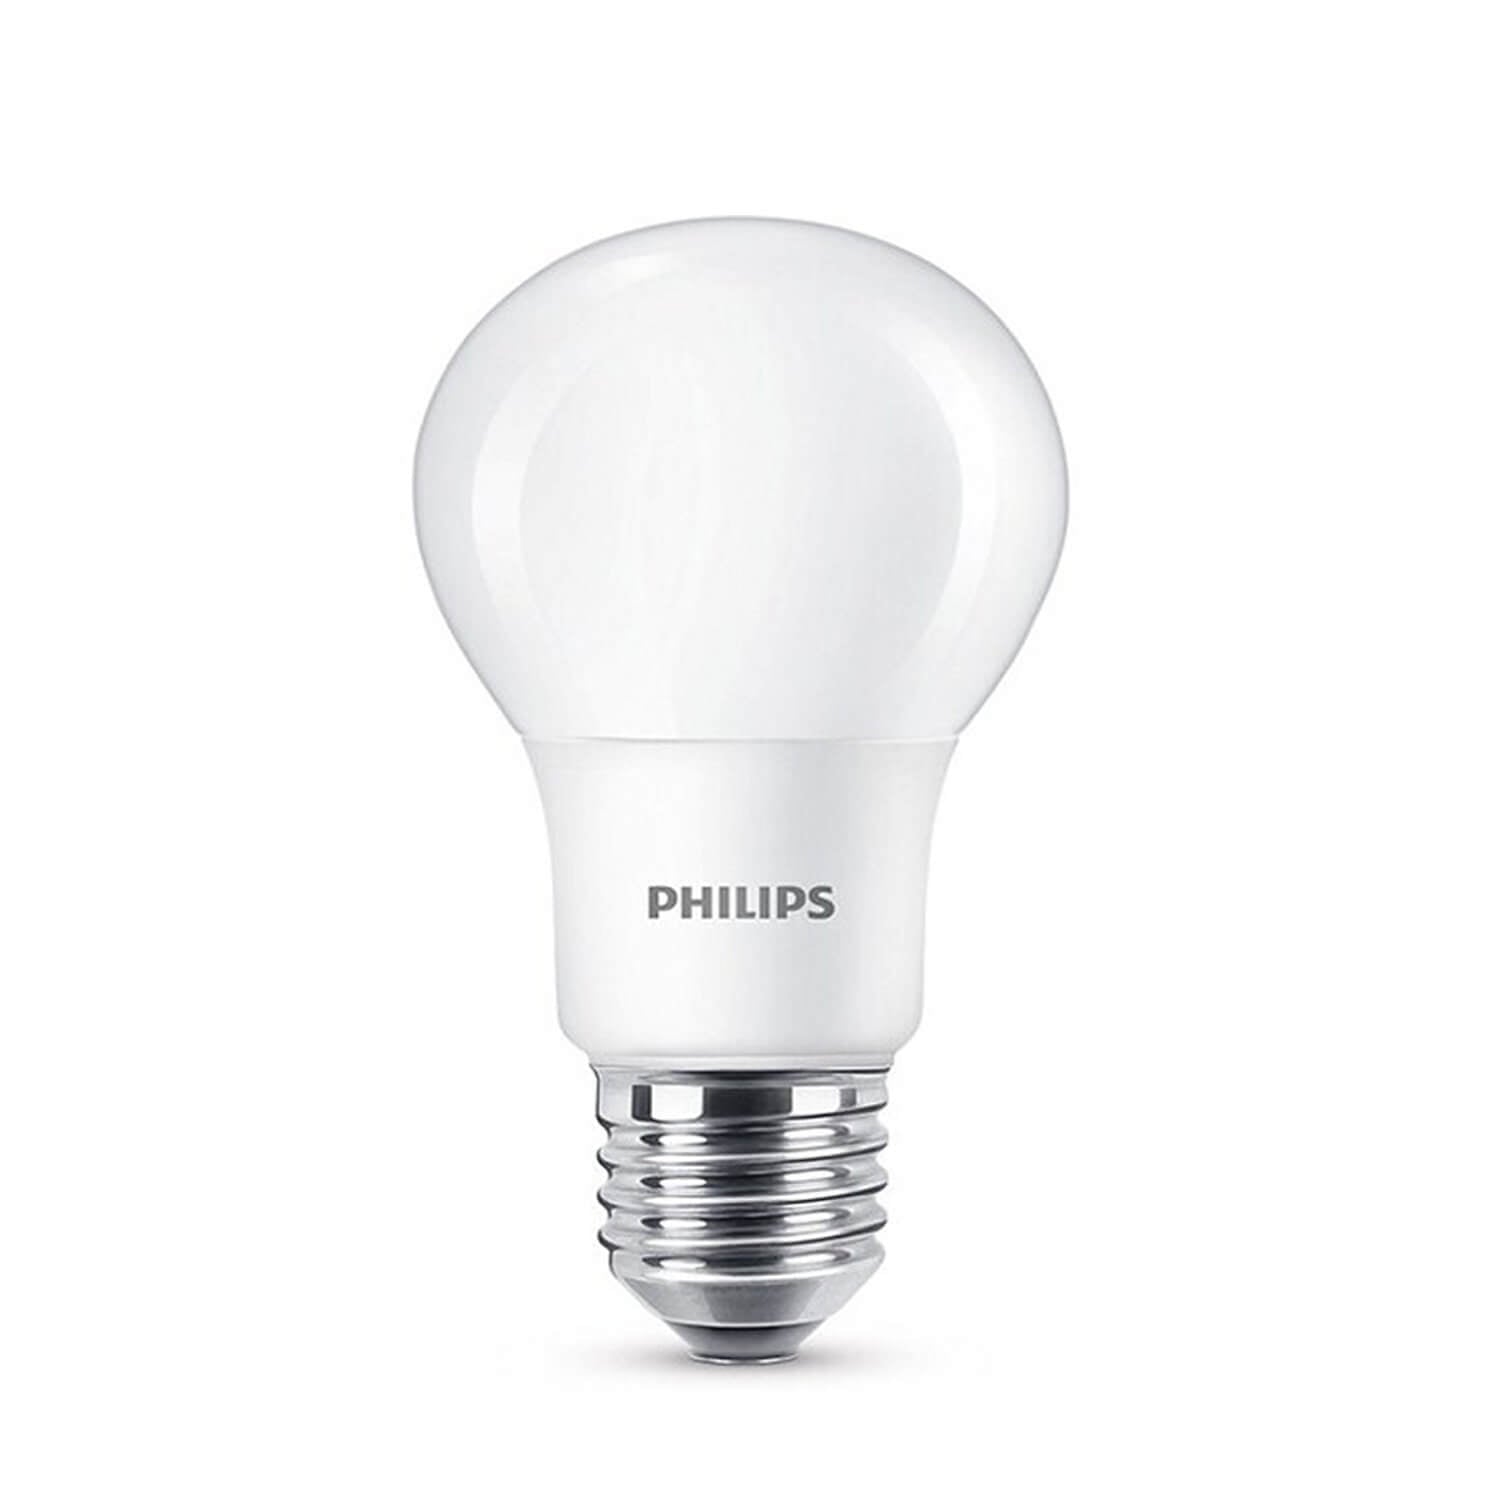 Set 2 becuri LED Philips A60 E27 8W 806 lumeni, cu glob mat